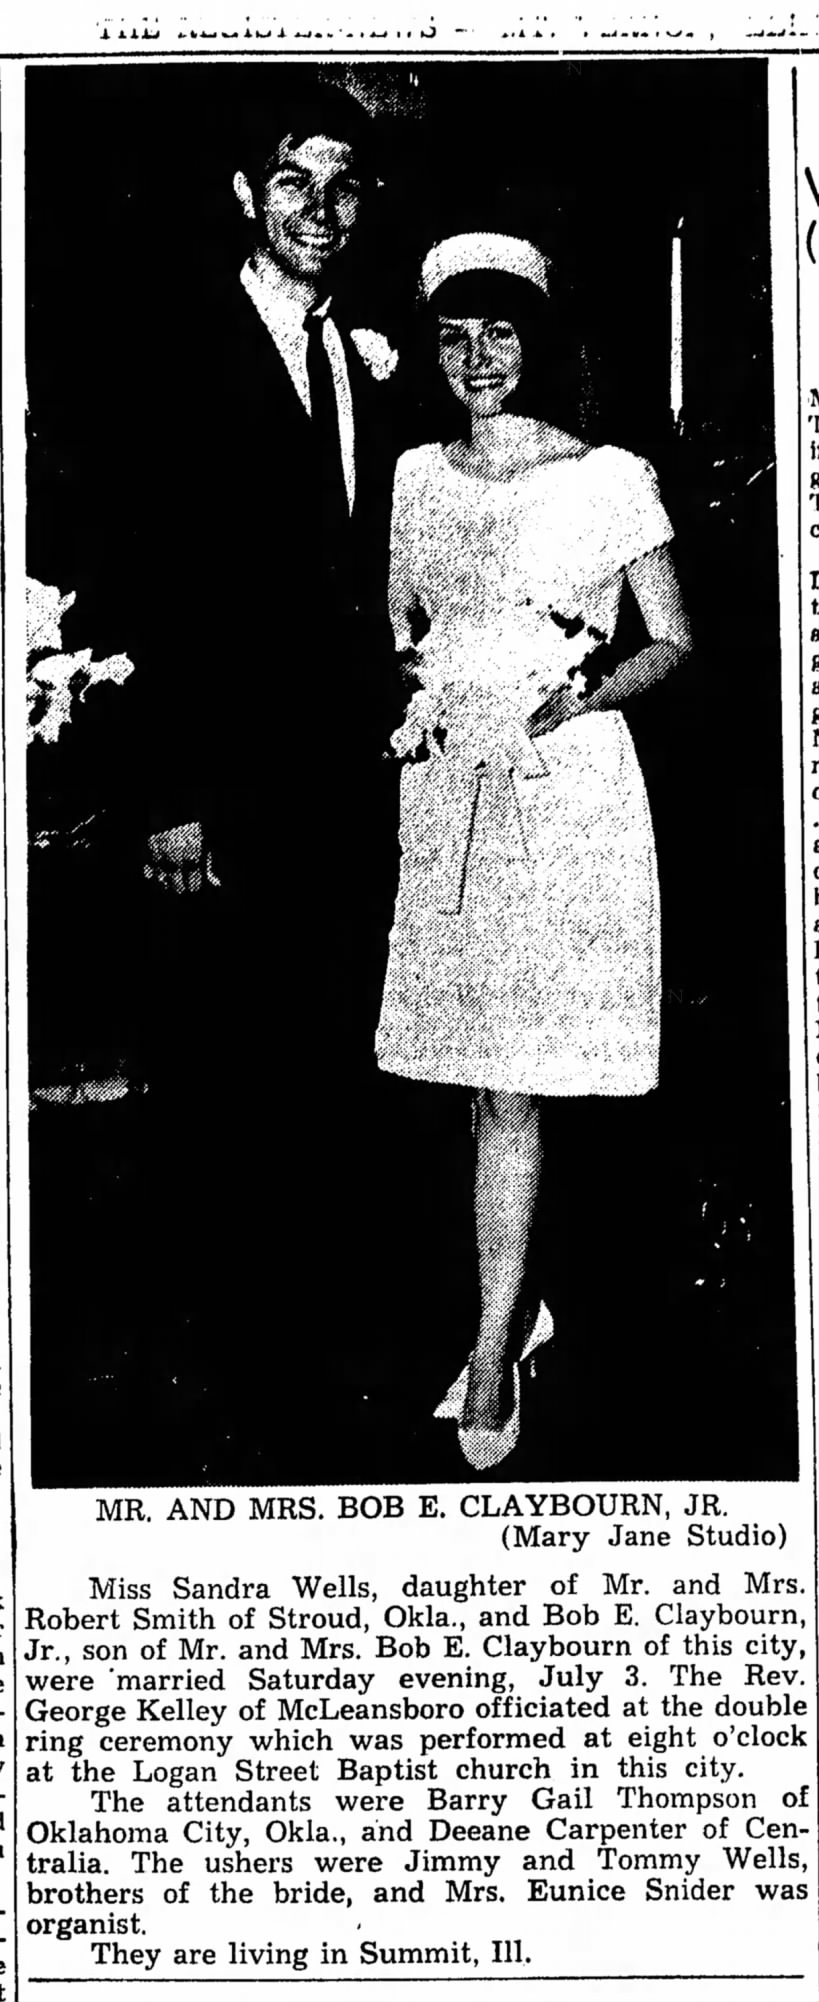 1965Aug10-BobEClaybournJr-wedding